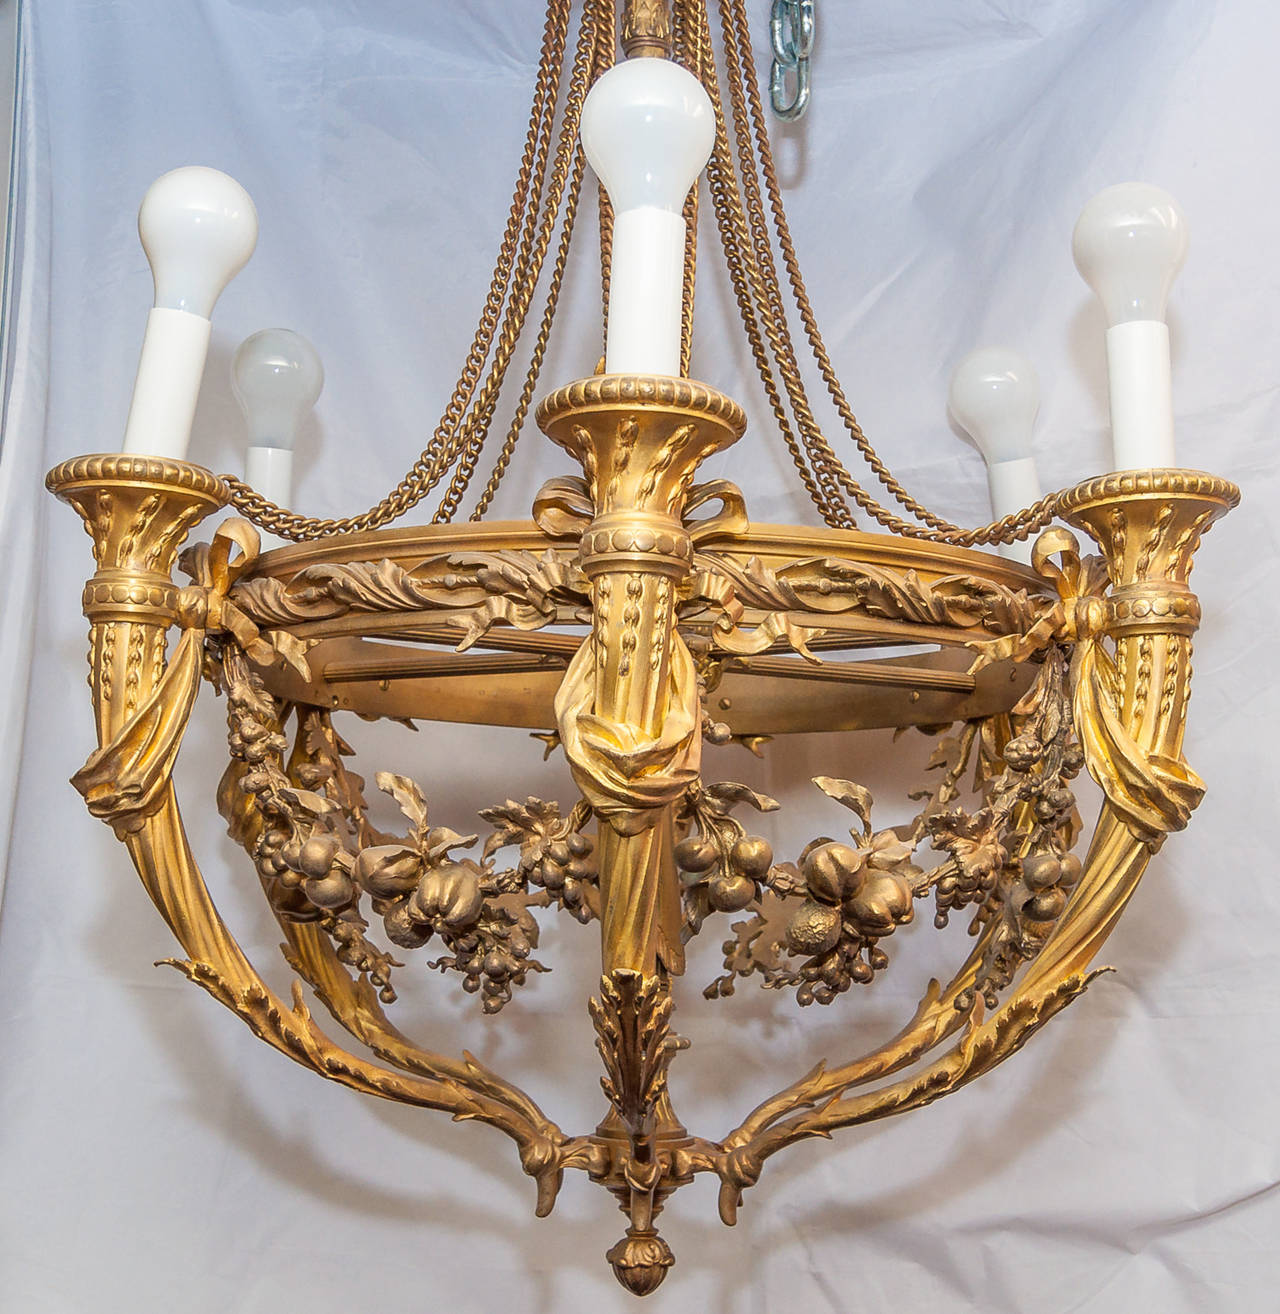 Very fine Louis XVI style bronze six-light chandelier with fruit motif.
Stock number: L184.